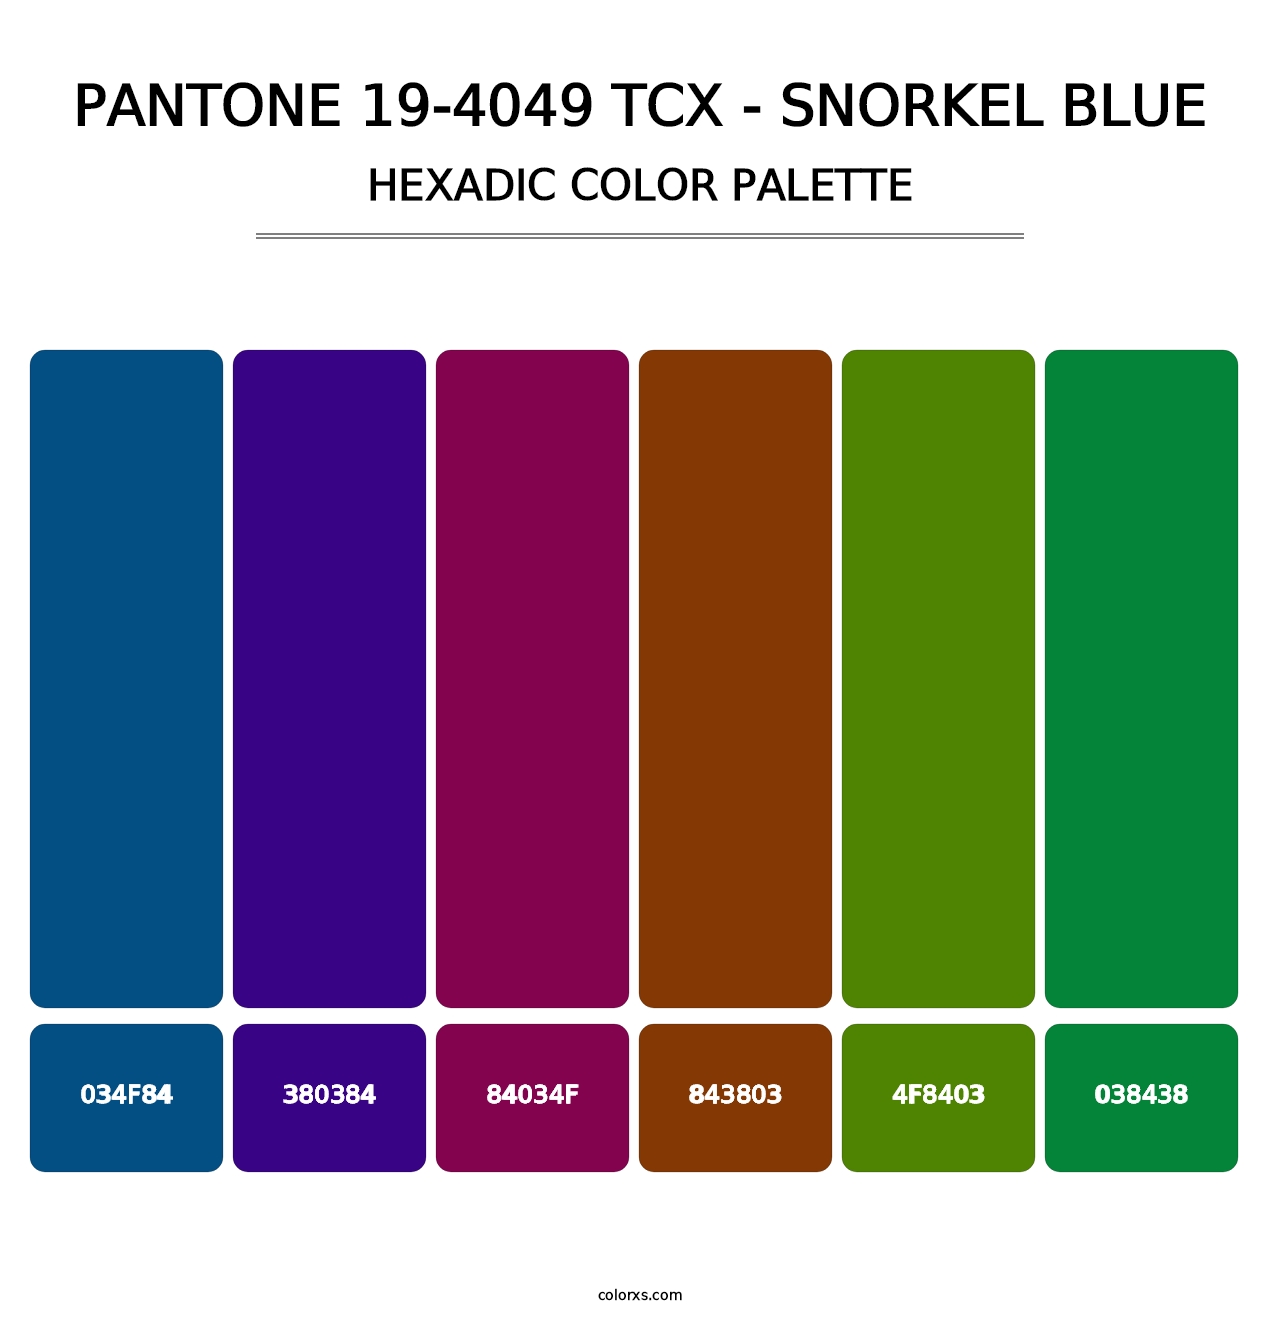 PANTONE 19-4049 TCX - Snorkel Blue - Hexadic Color Palette